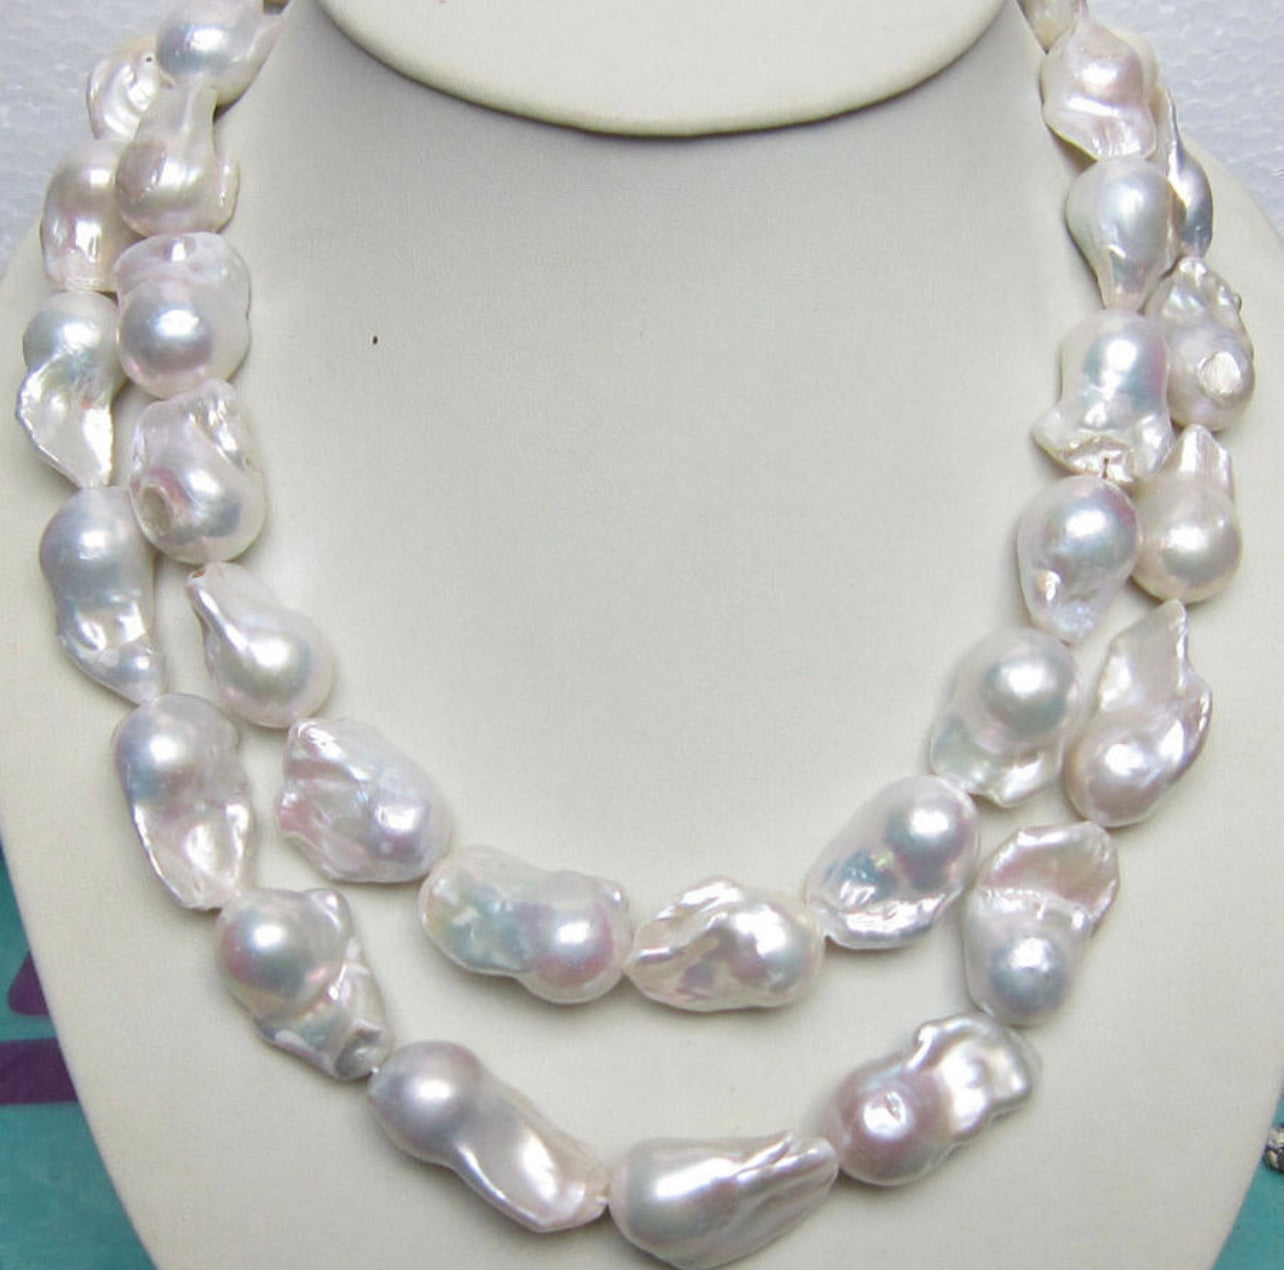 Captivating Natural Baroque South Sea Baroque Pearl Necklace 18”, 24”, 36”